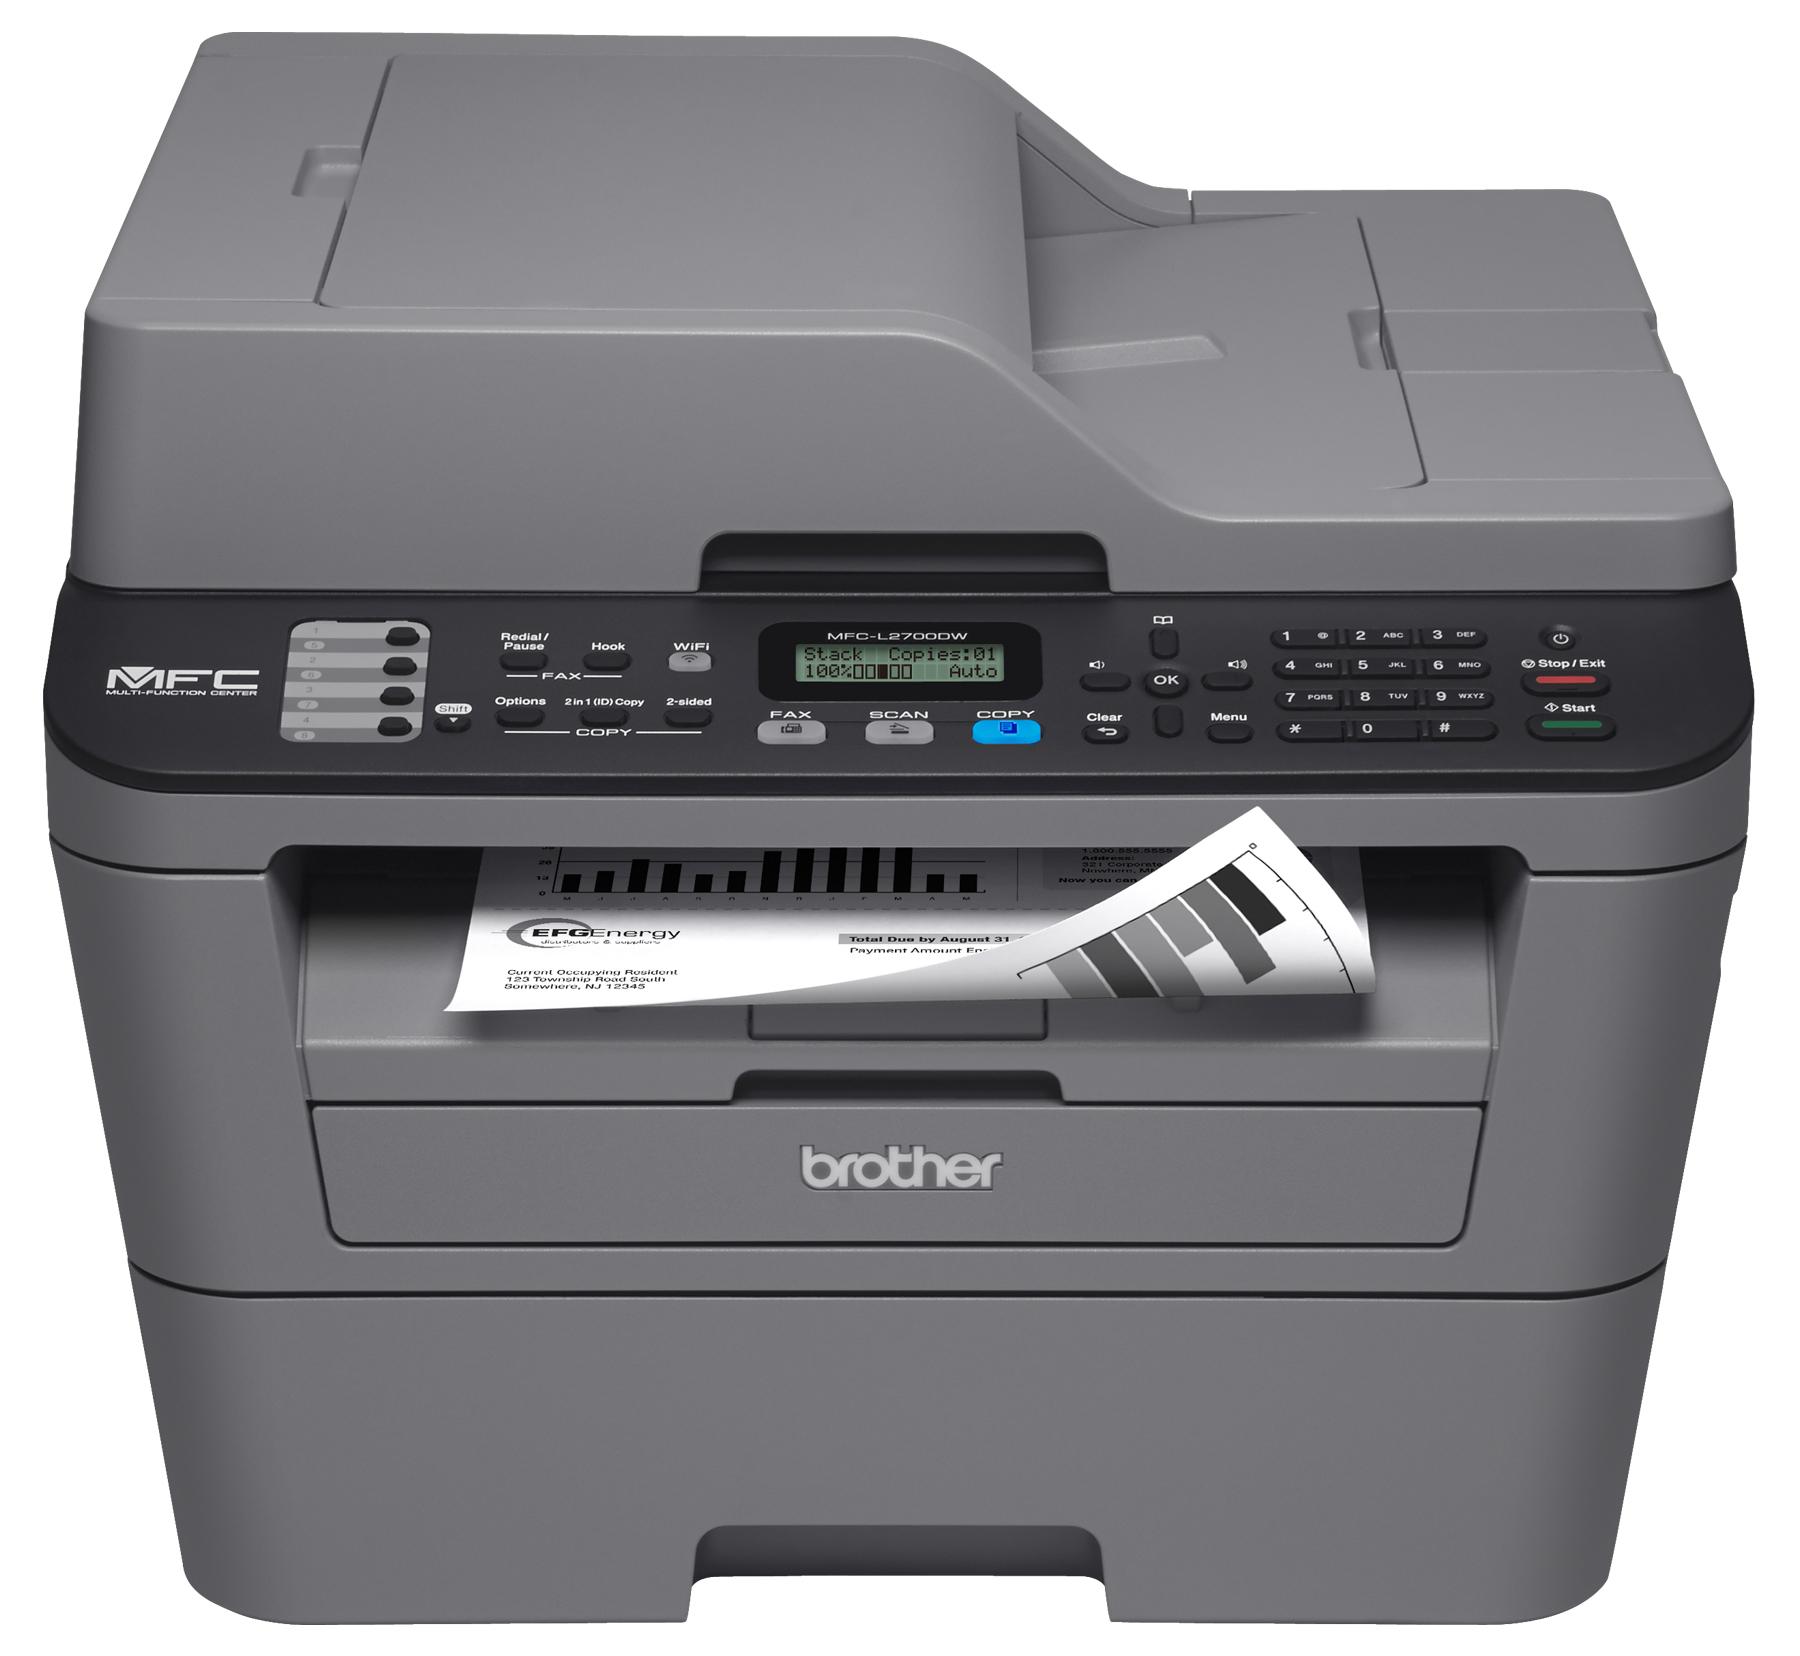 Brother MFC-L2710DW - multifunction printer - B/W